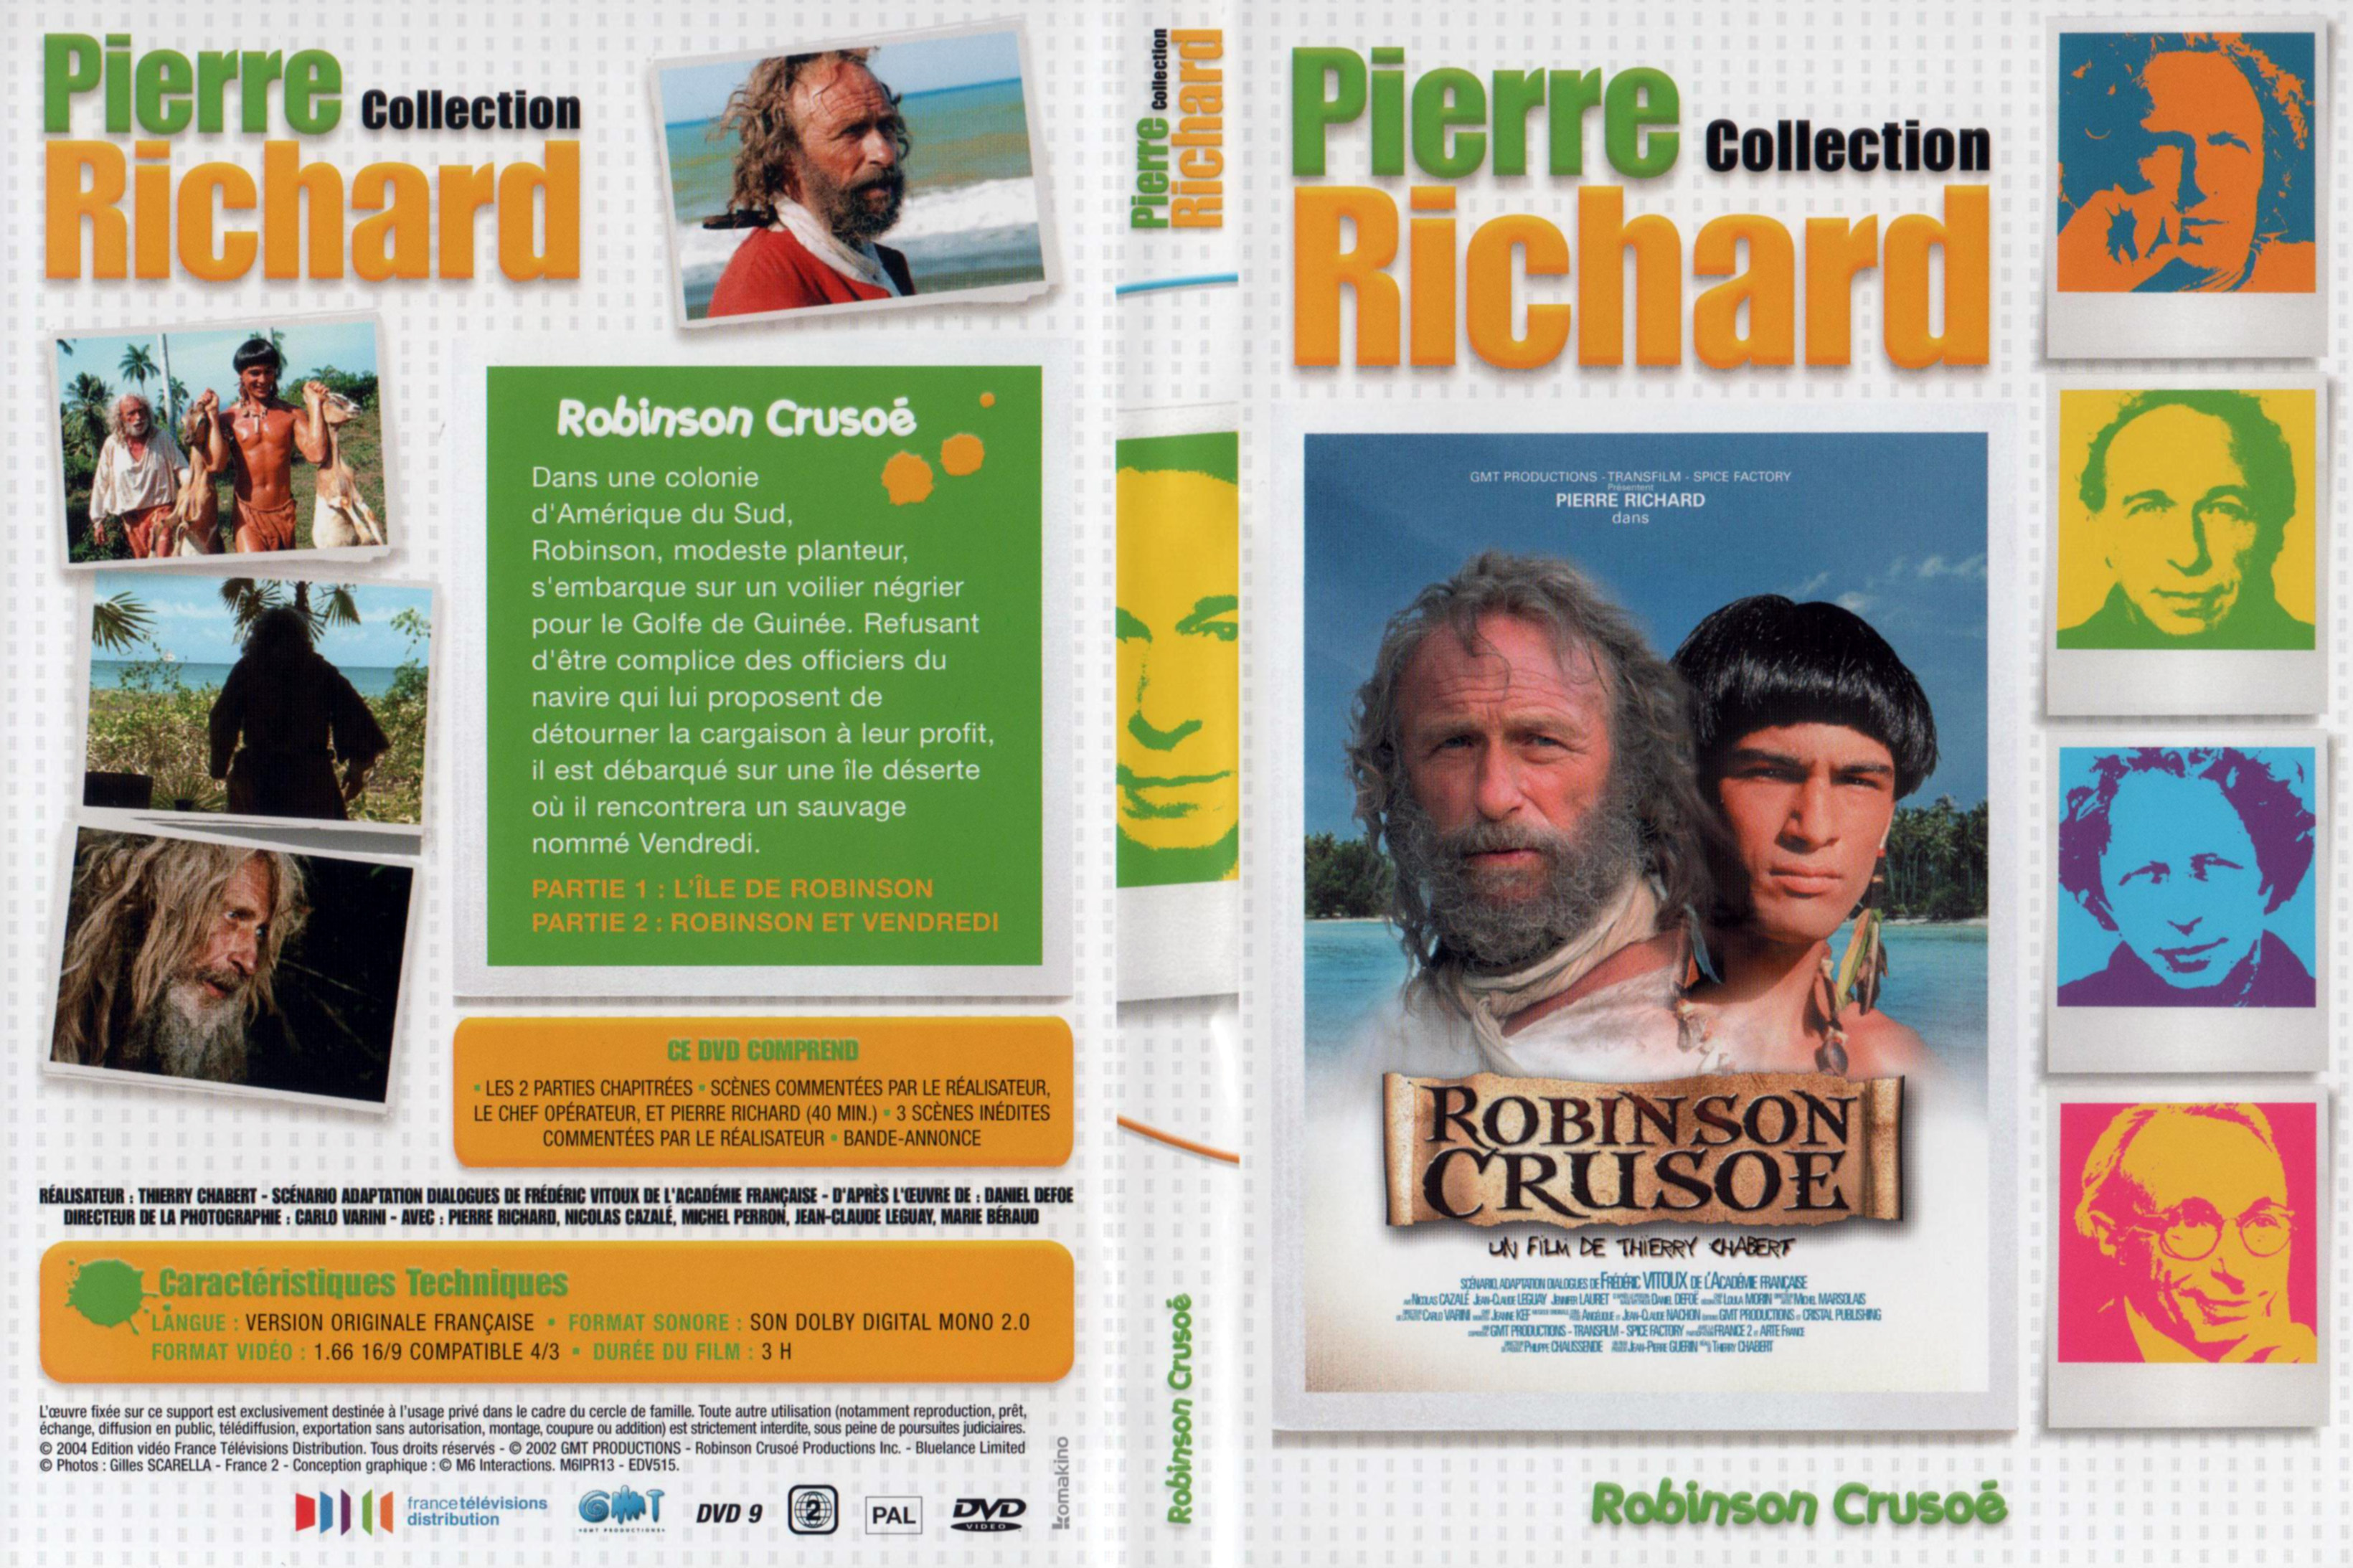 Jaquette DVD Robinson Crusoe Pierre Richard v2